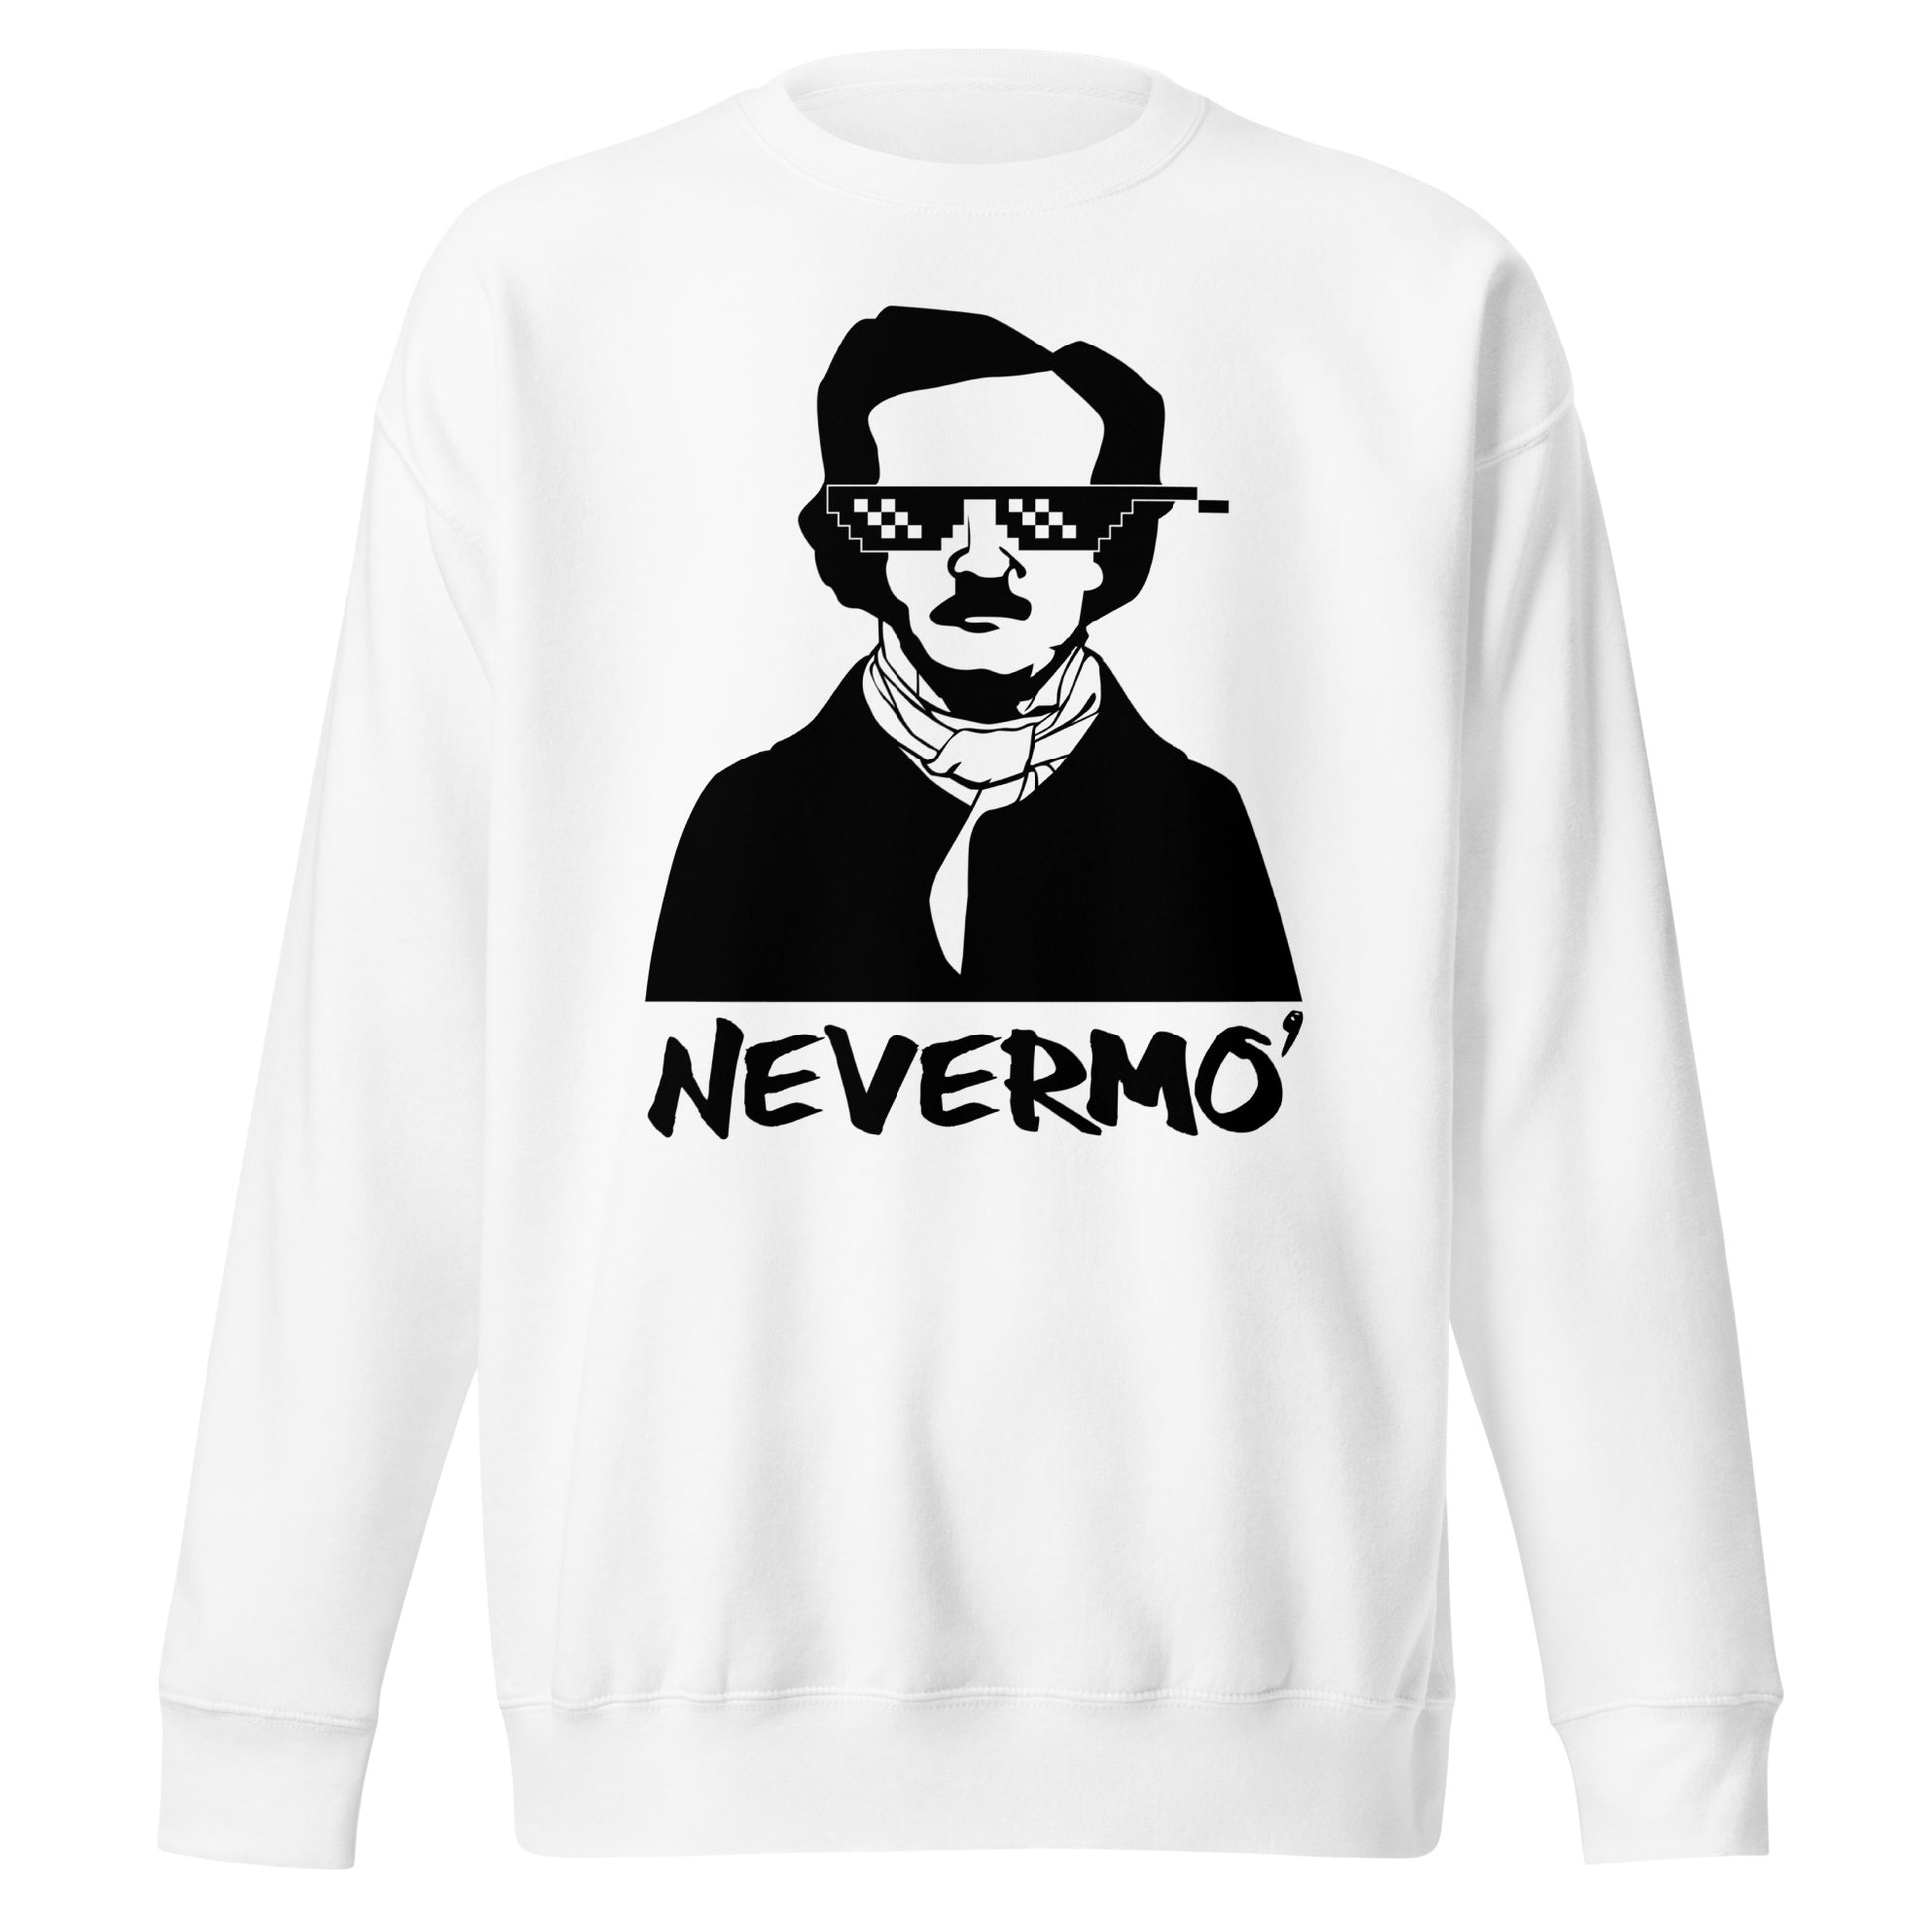 Men's Edgar Allan Poe "Nevermo" Unisex Premium Sweatshirt - White Front